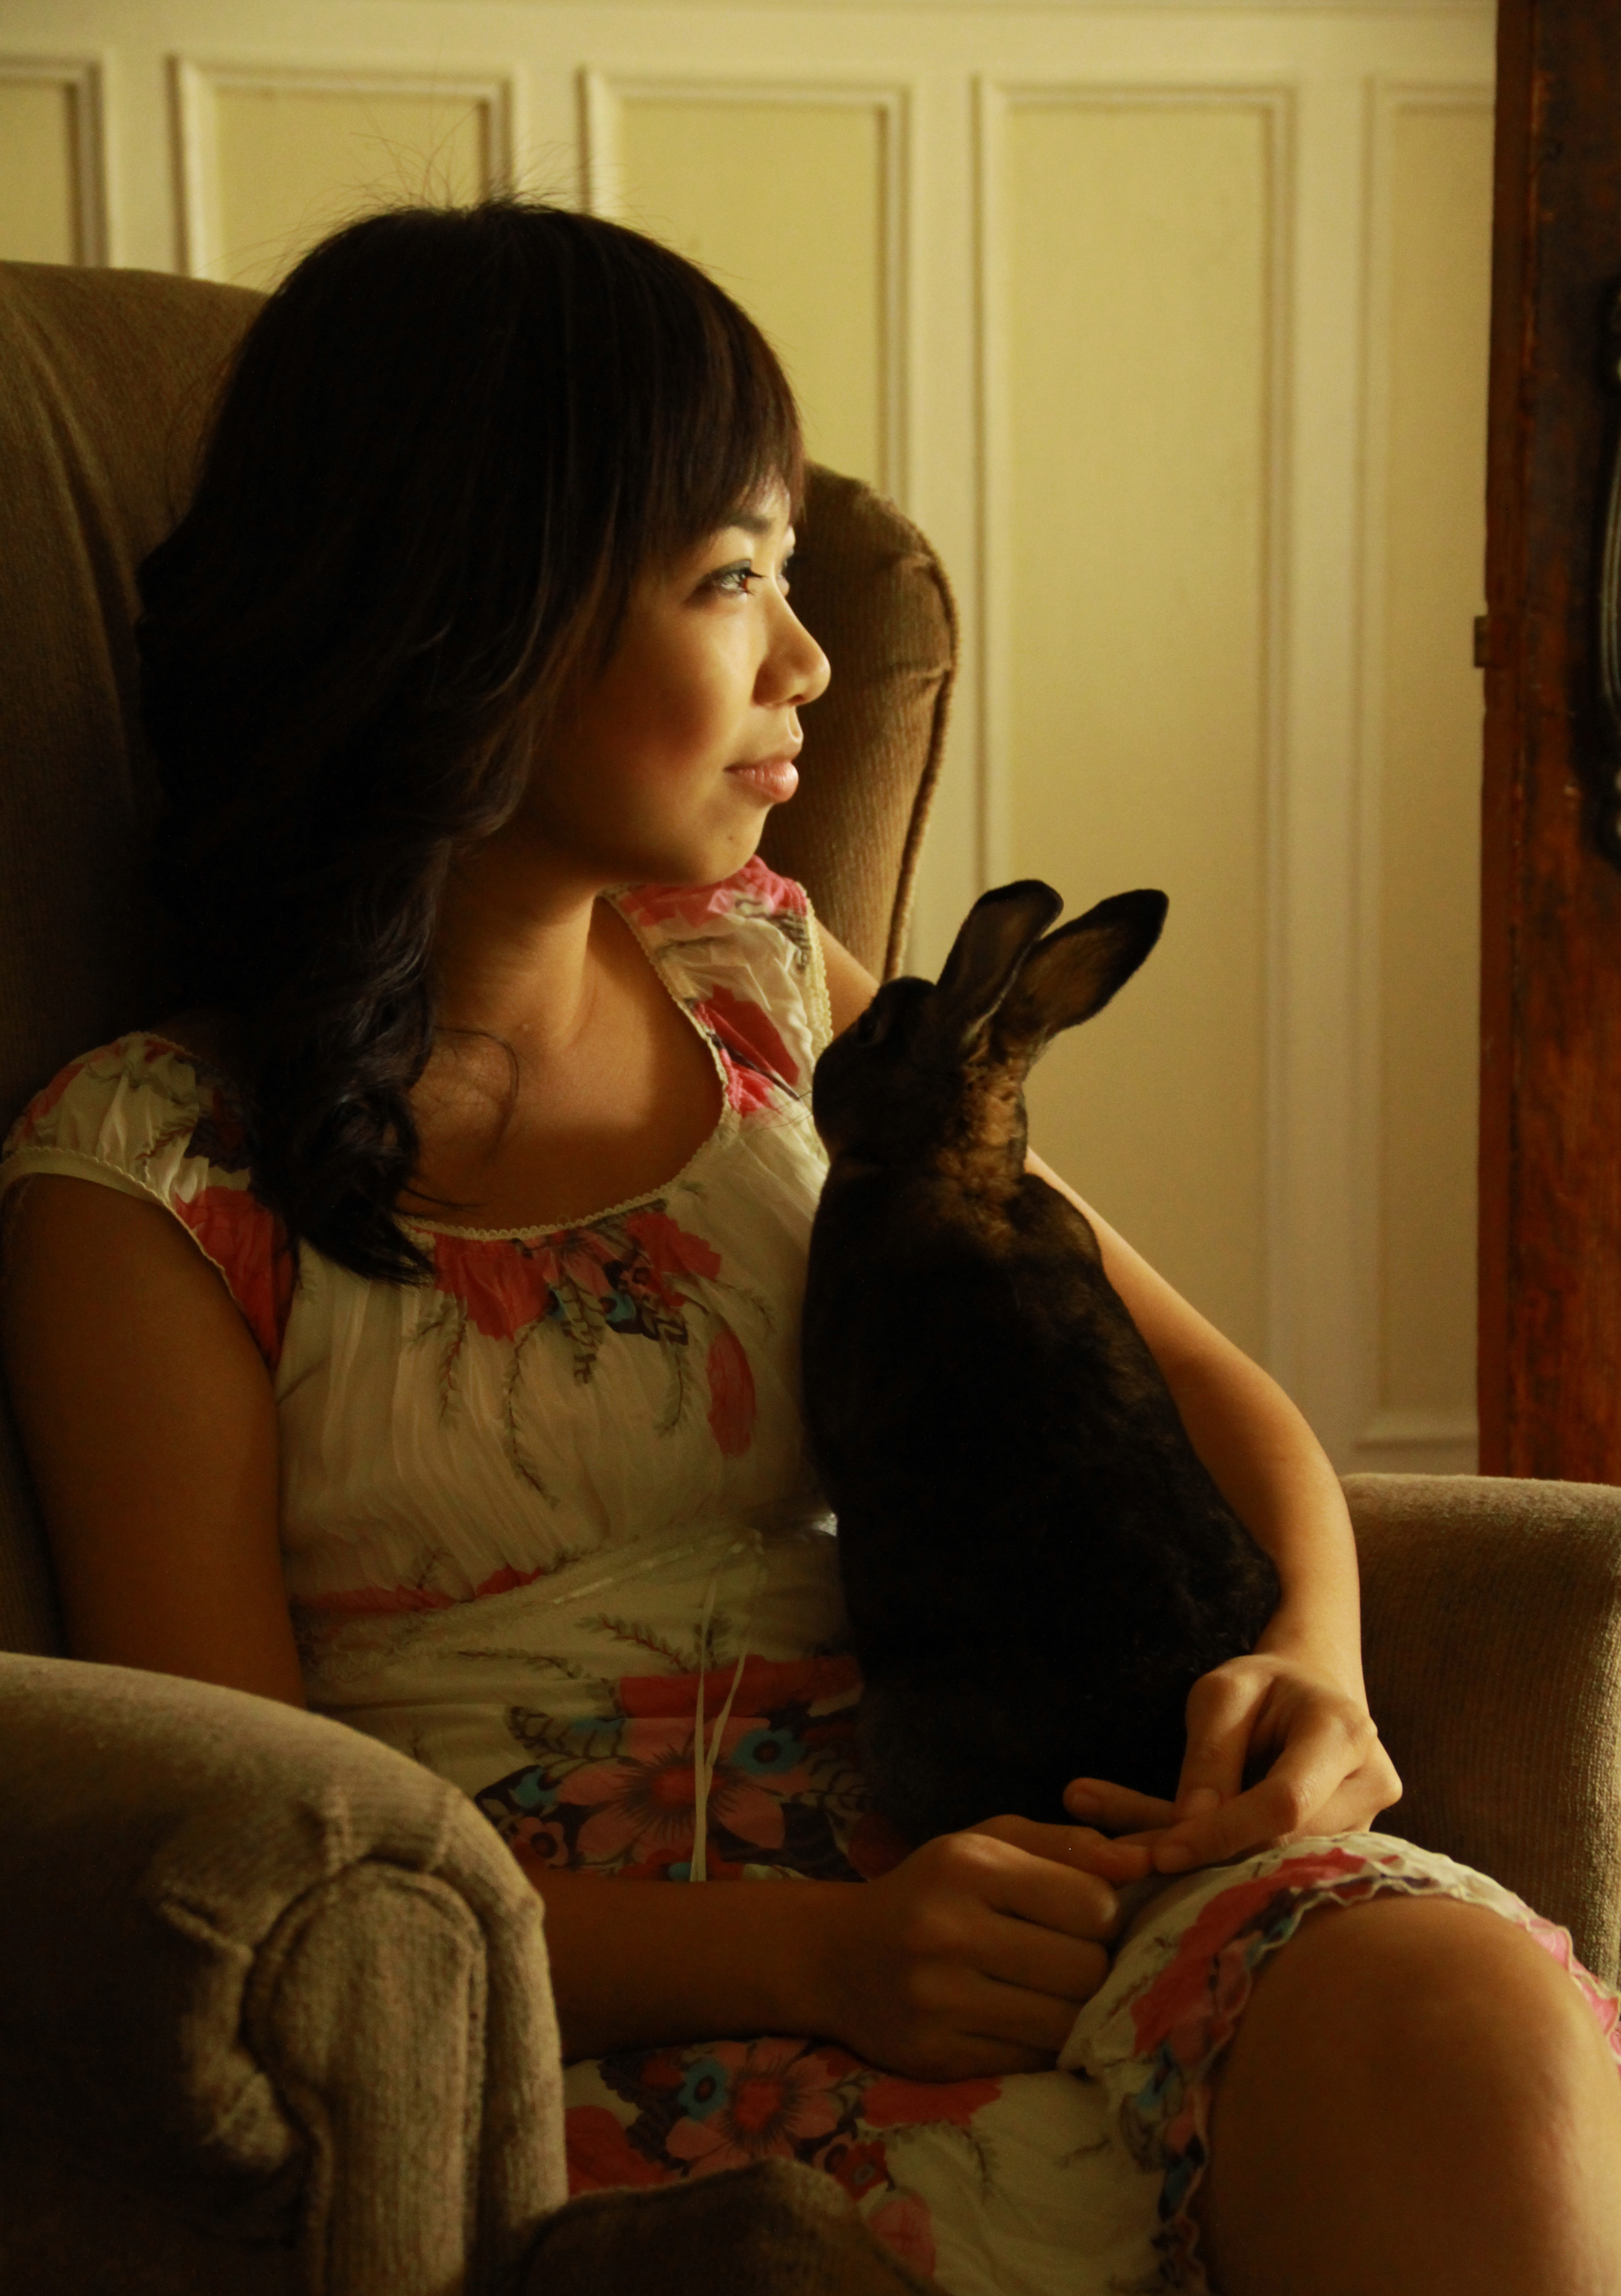 Anita with her rabbit, Gromit